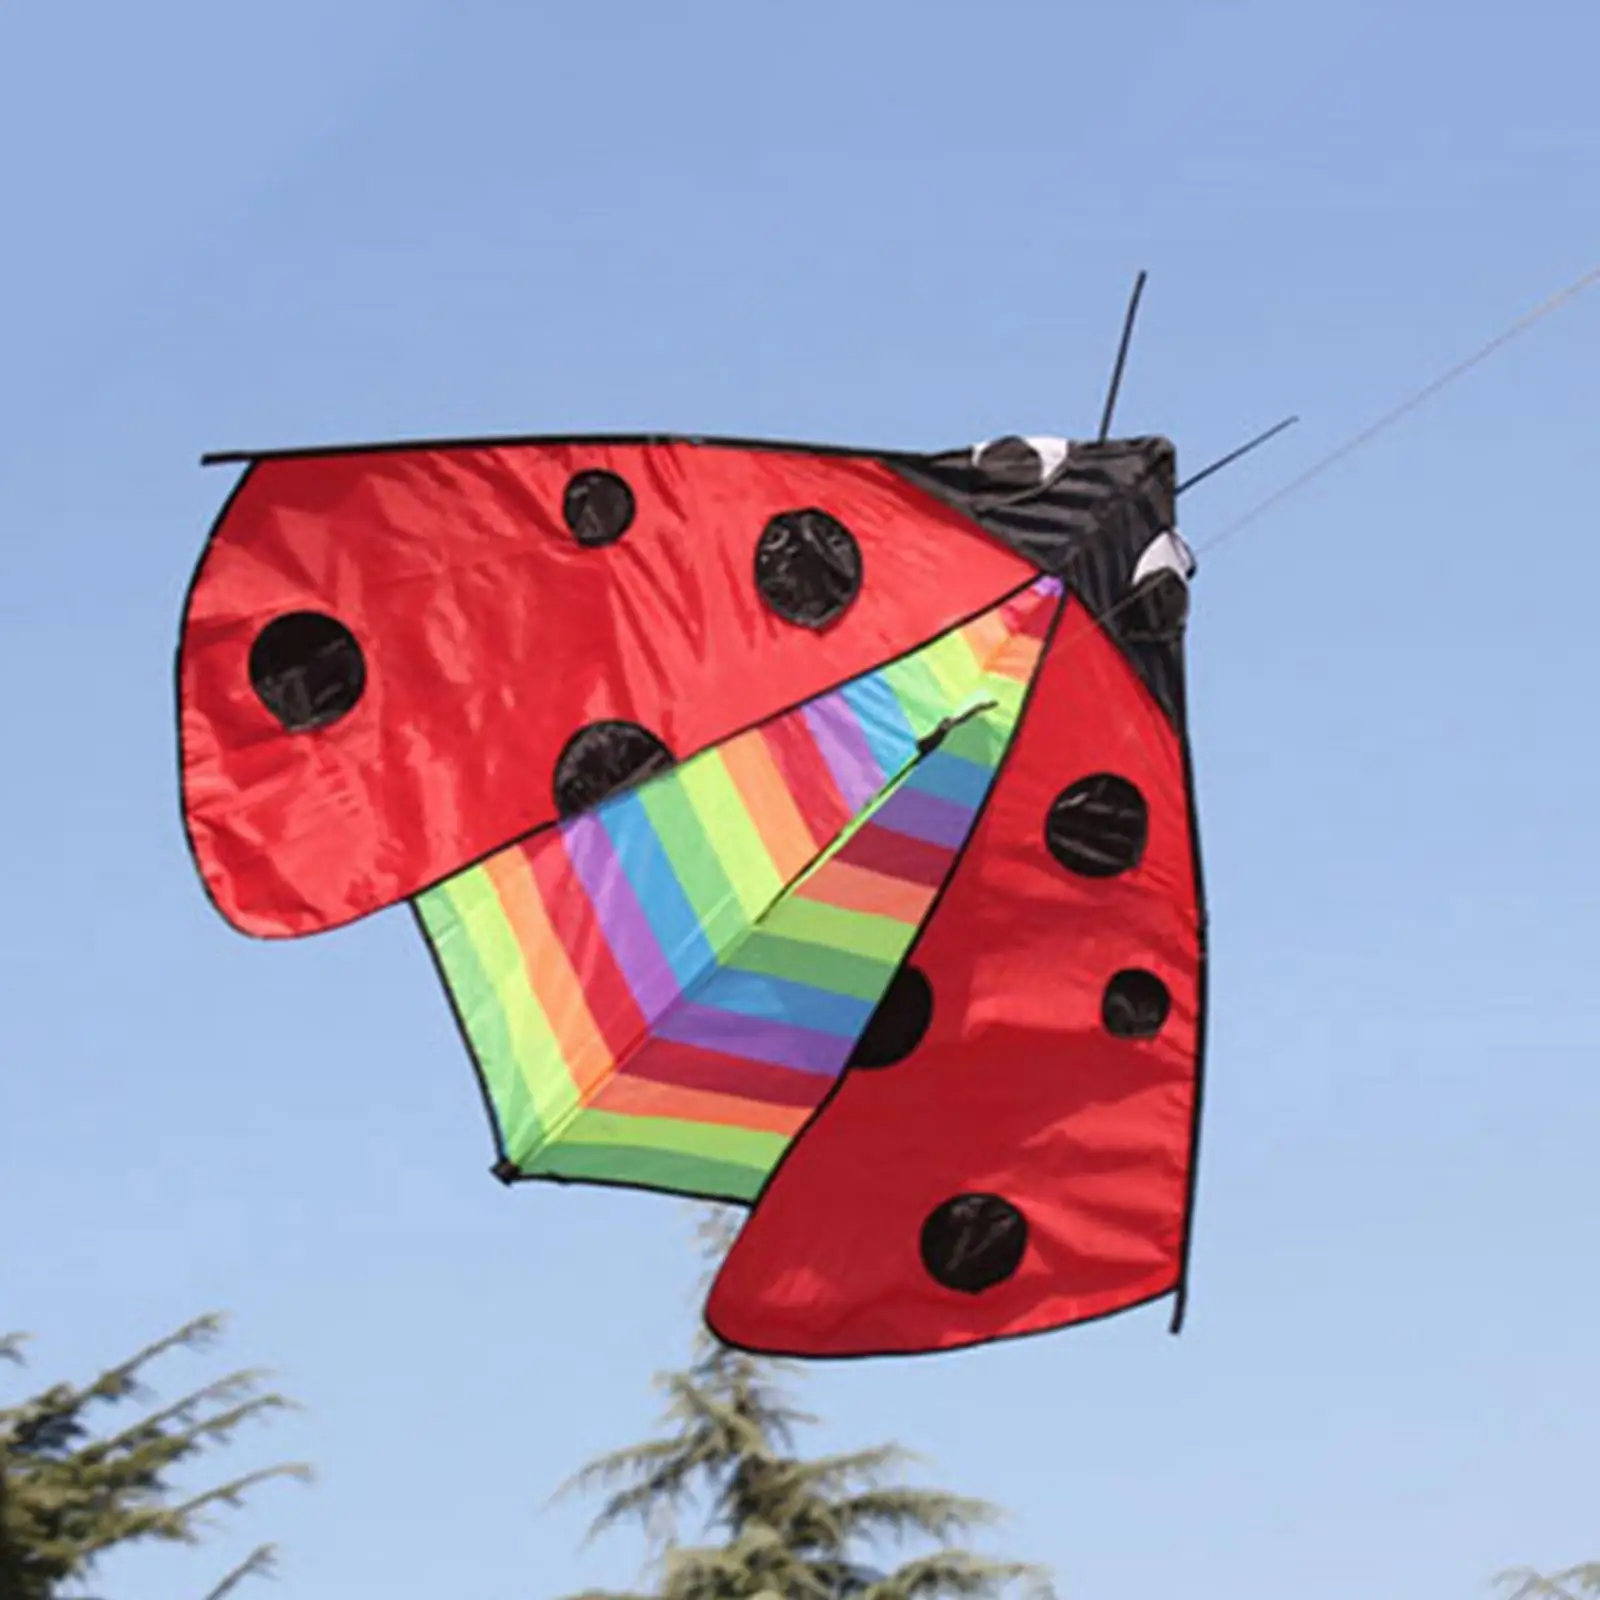 Novelty Delta Kite Fly Kite Easy Flyer Single-Line Fun Toy Giant Triangle Ladybug Kite for Park Sports Beach Outdoor Holiday